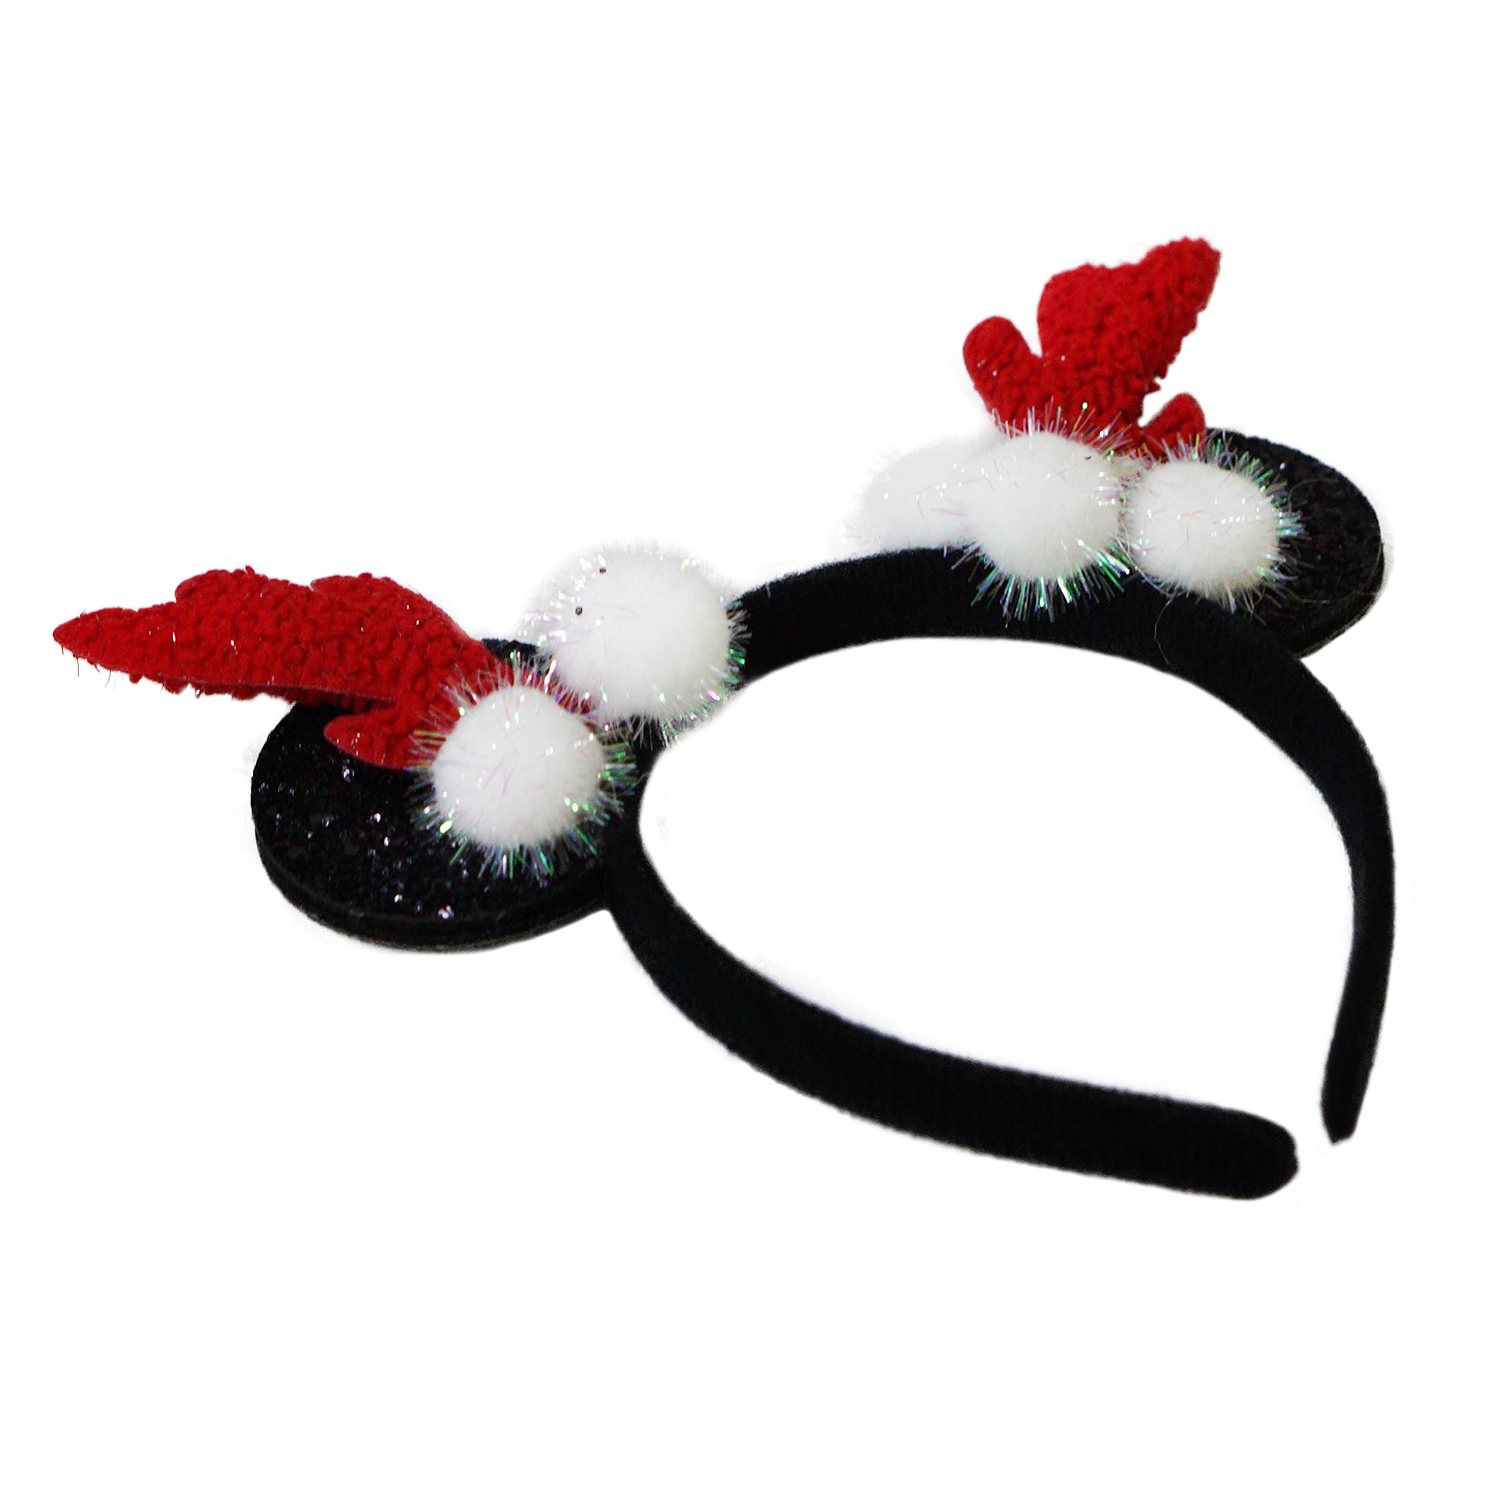 Aiwanto Hair Bands Hair Clippers Christmas Costume Hair Bands Hair Accessories